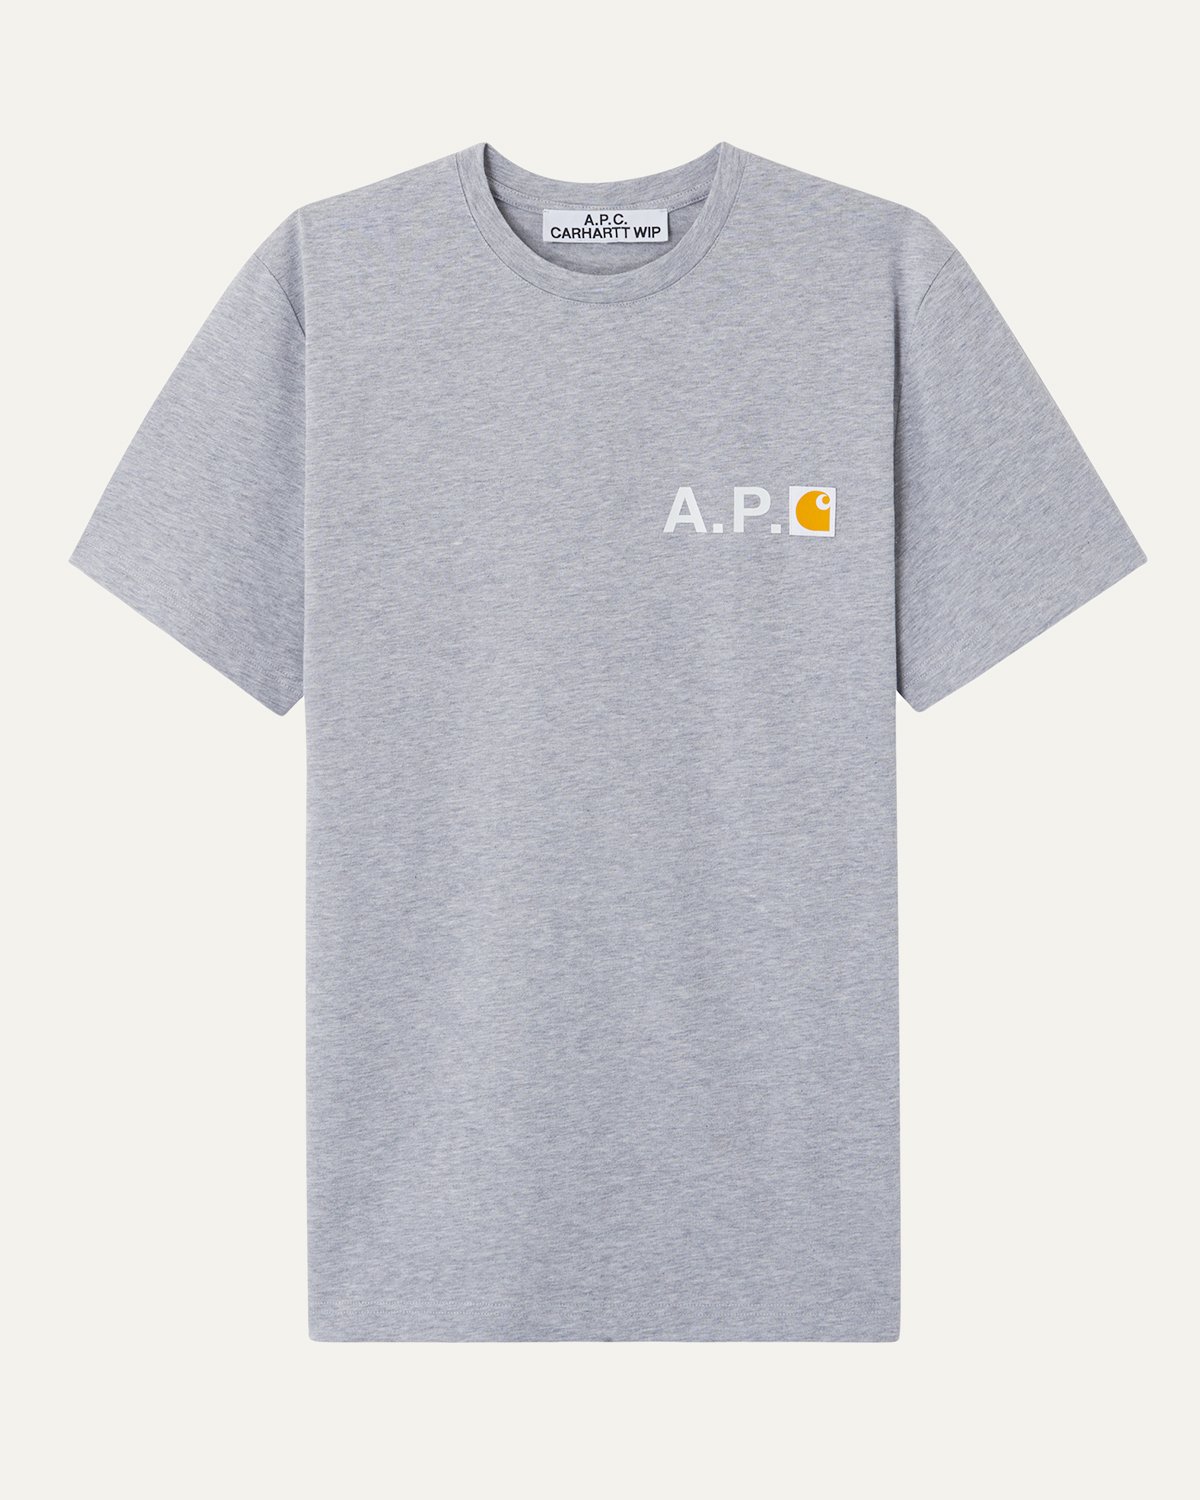 A.P.C. x Carhartt WIP - Fire T-Shirt Grey - Tops - Grey - Image 1